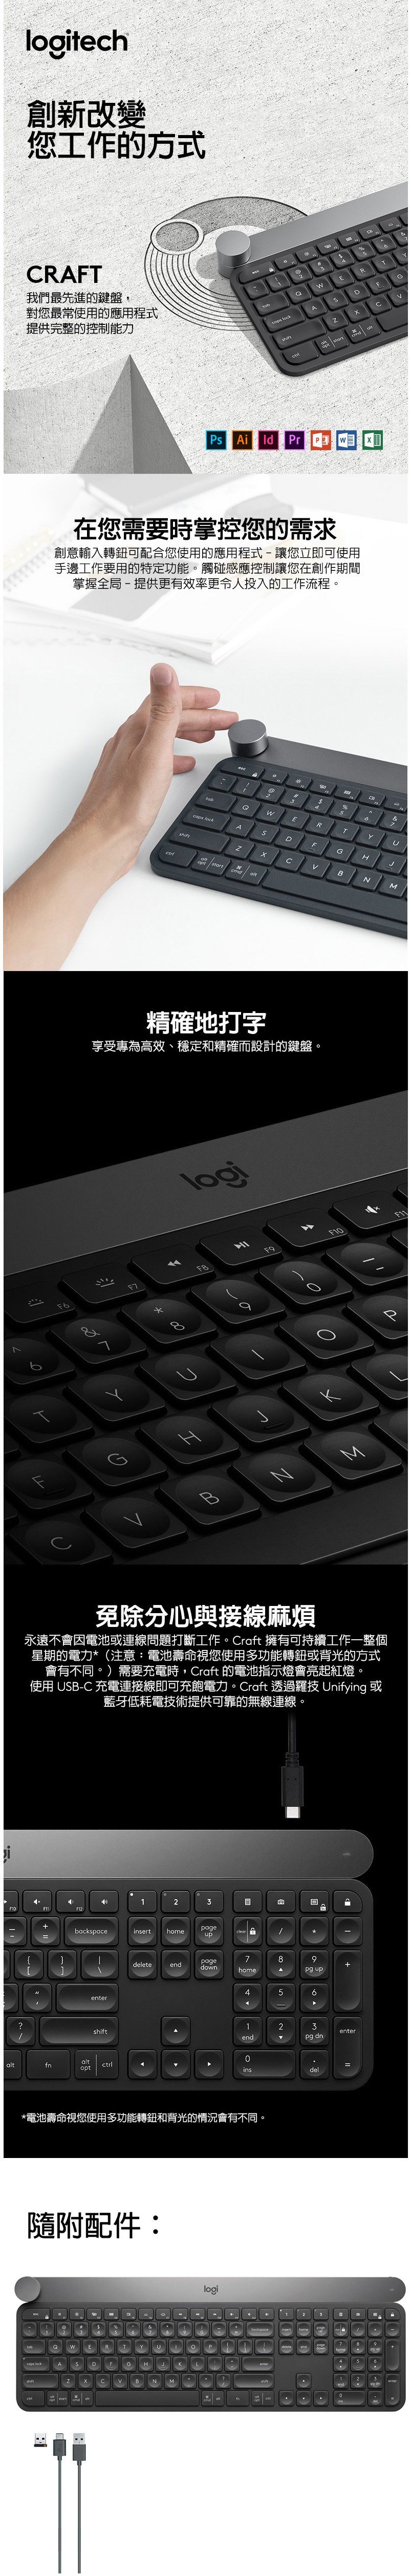 Logitech CRAFT Wireless Keyboard